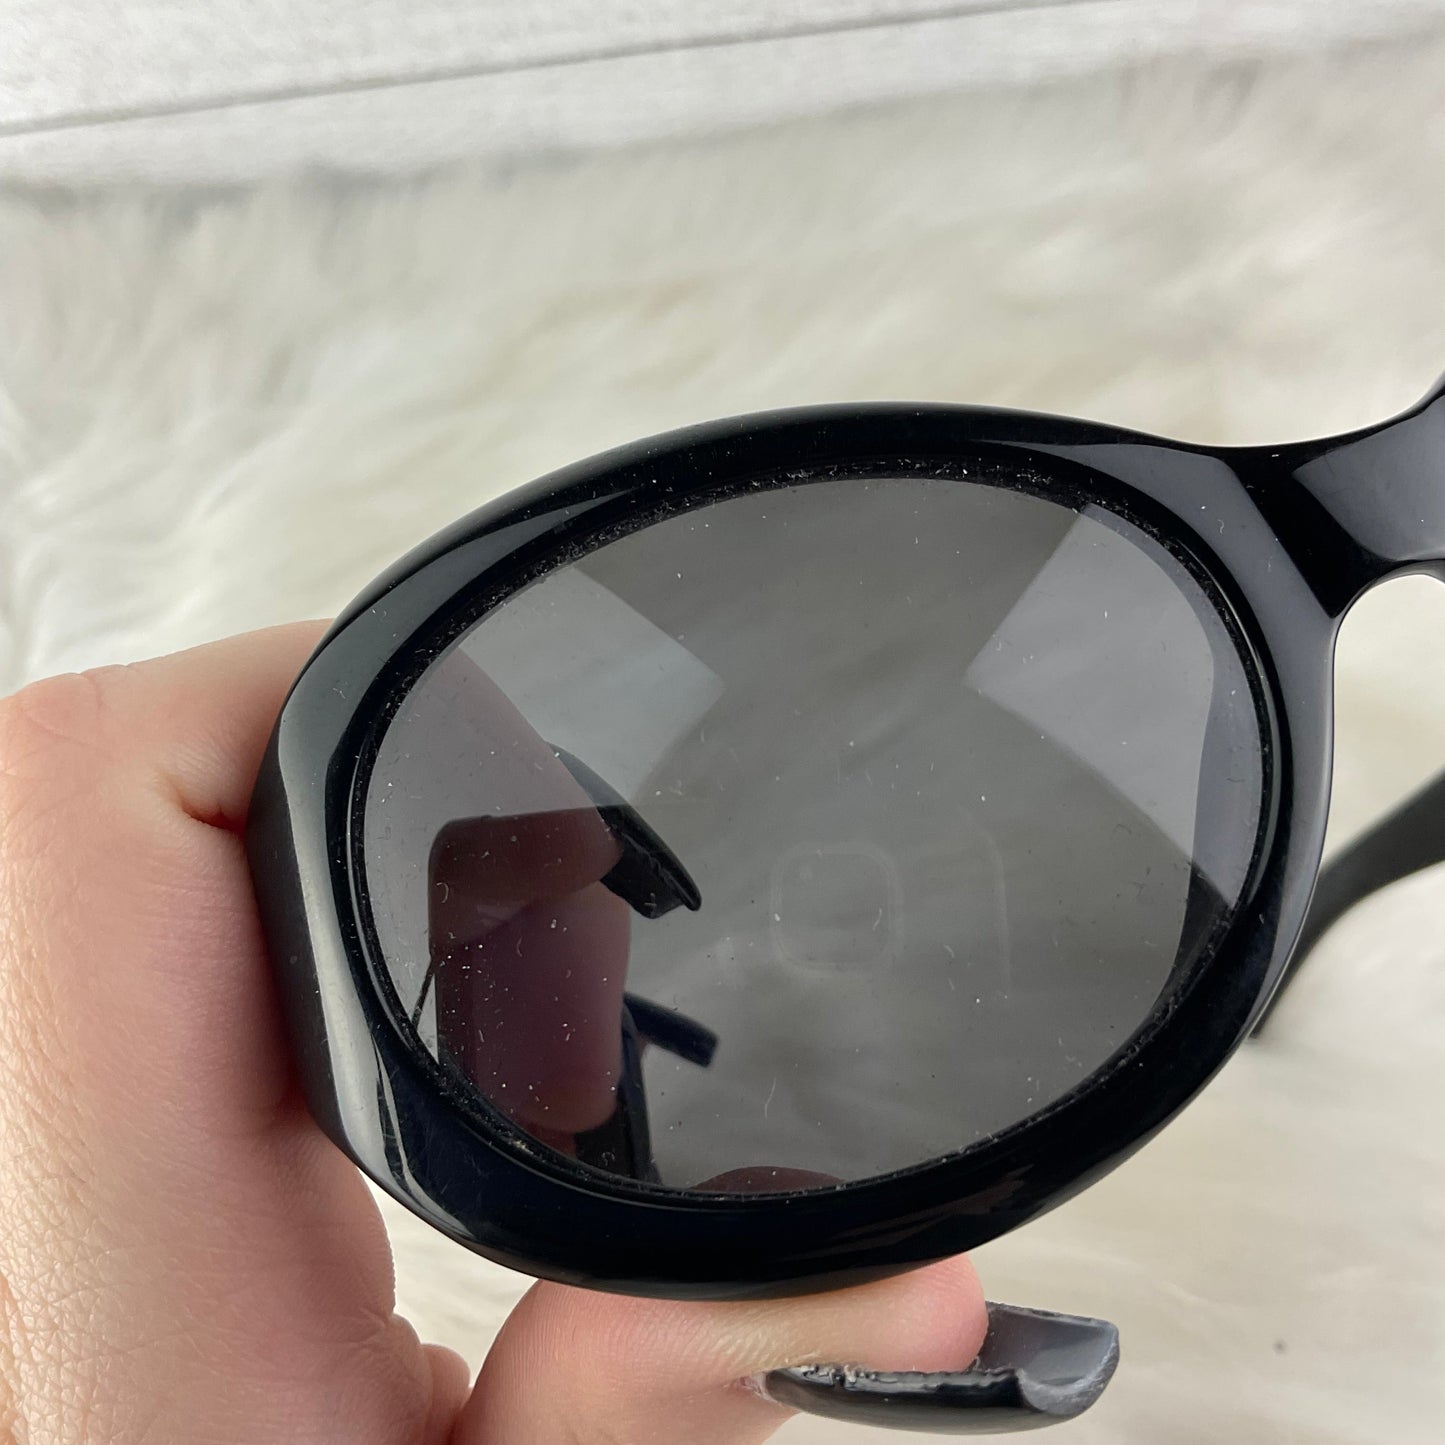 Sunglasses Designer By Brighton  Size: 01 Piece